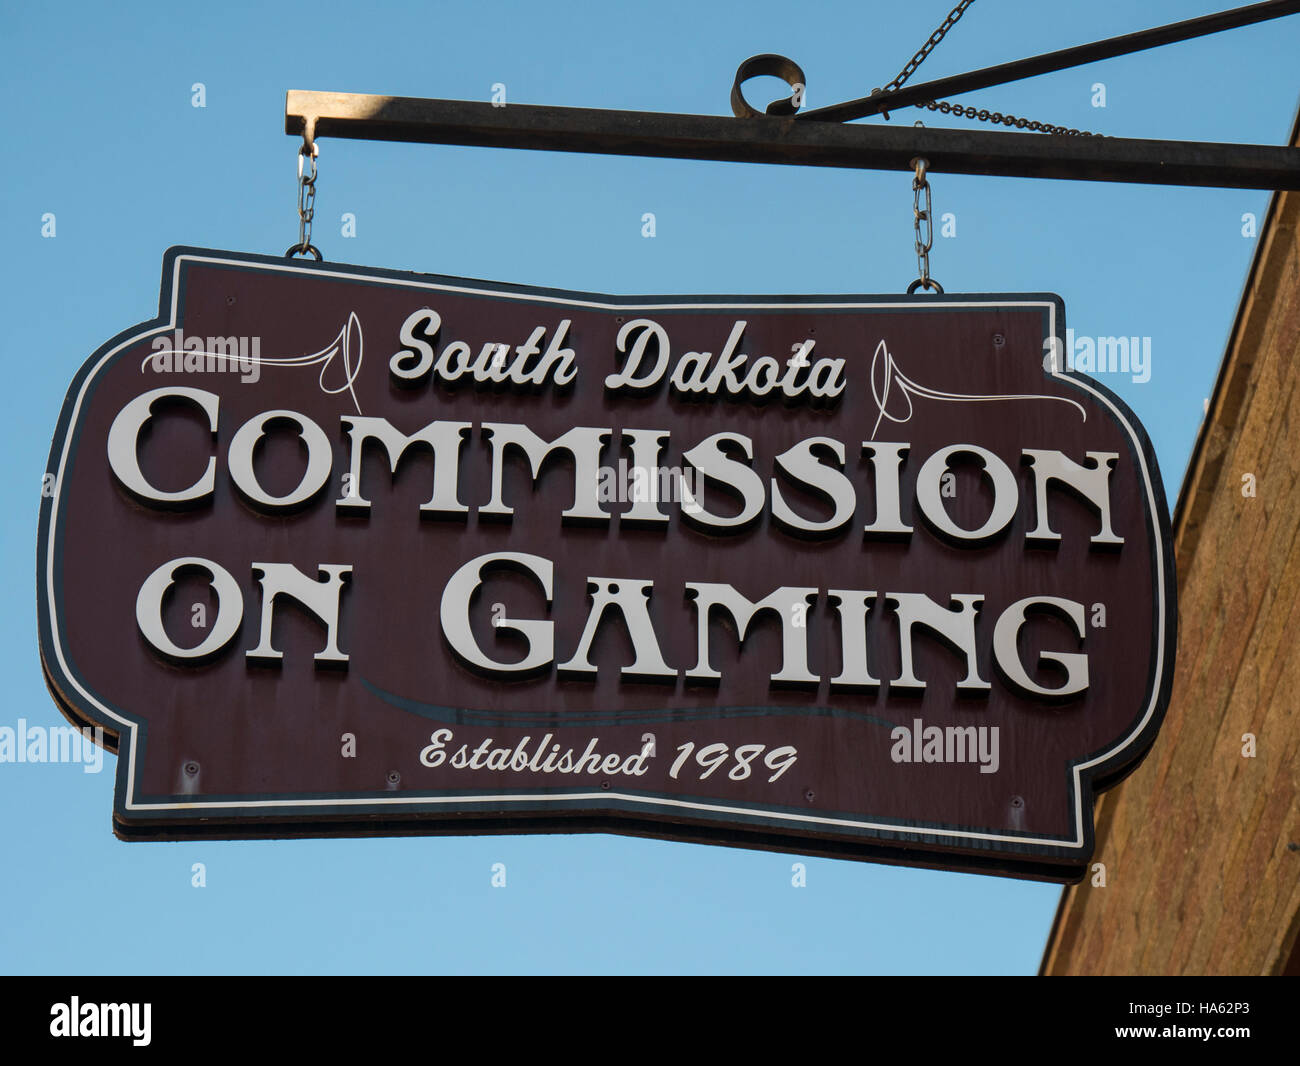 South Dakota Commission on Gaming